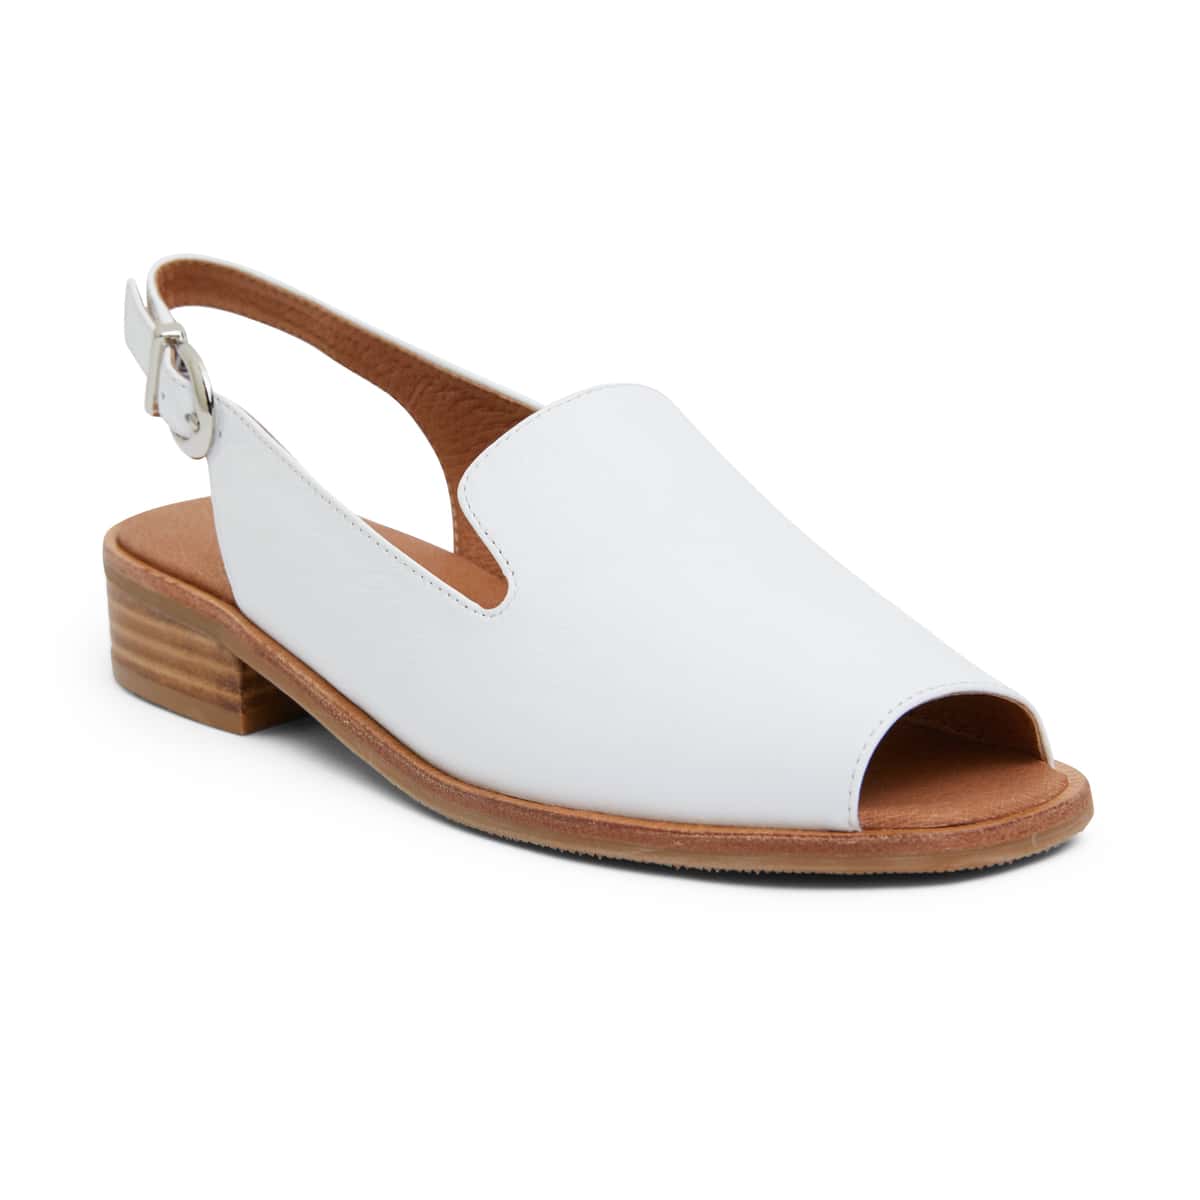 Delaney Sandal in White Leather